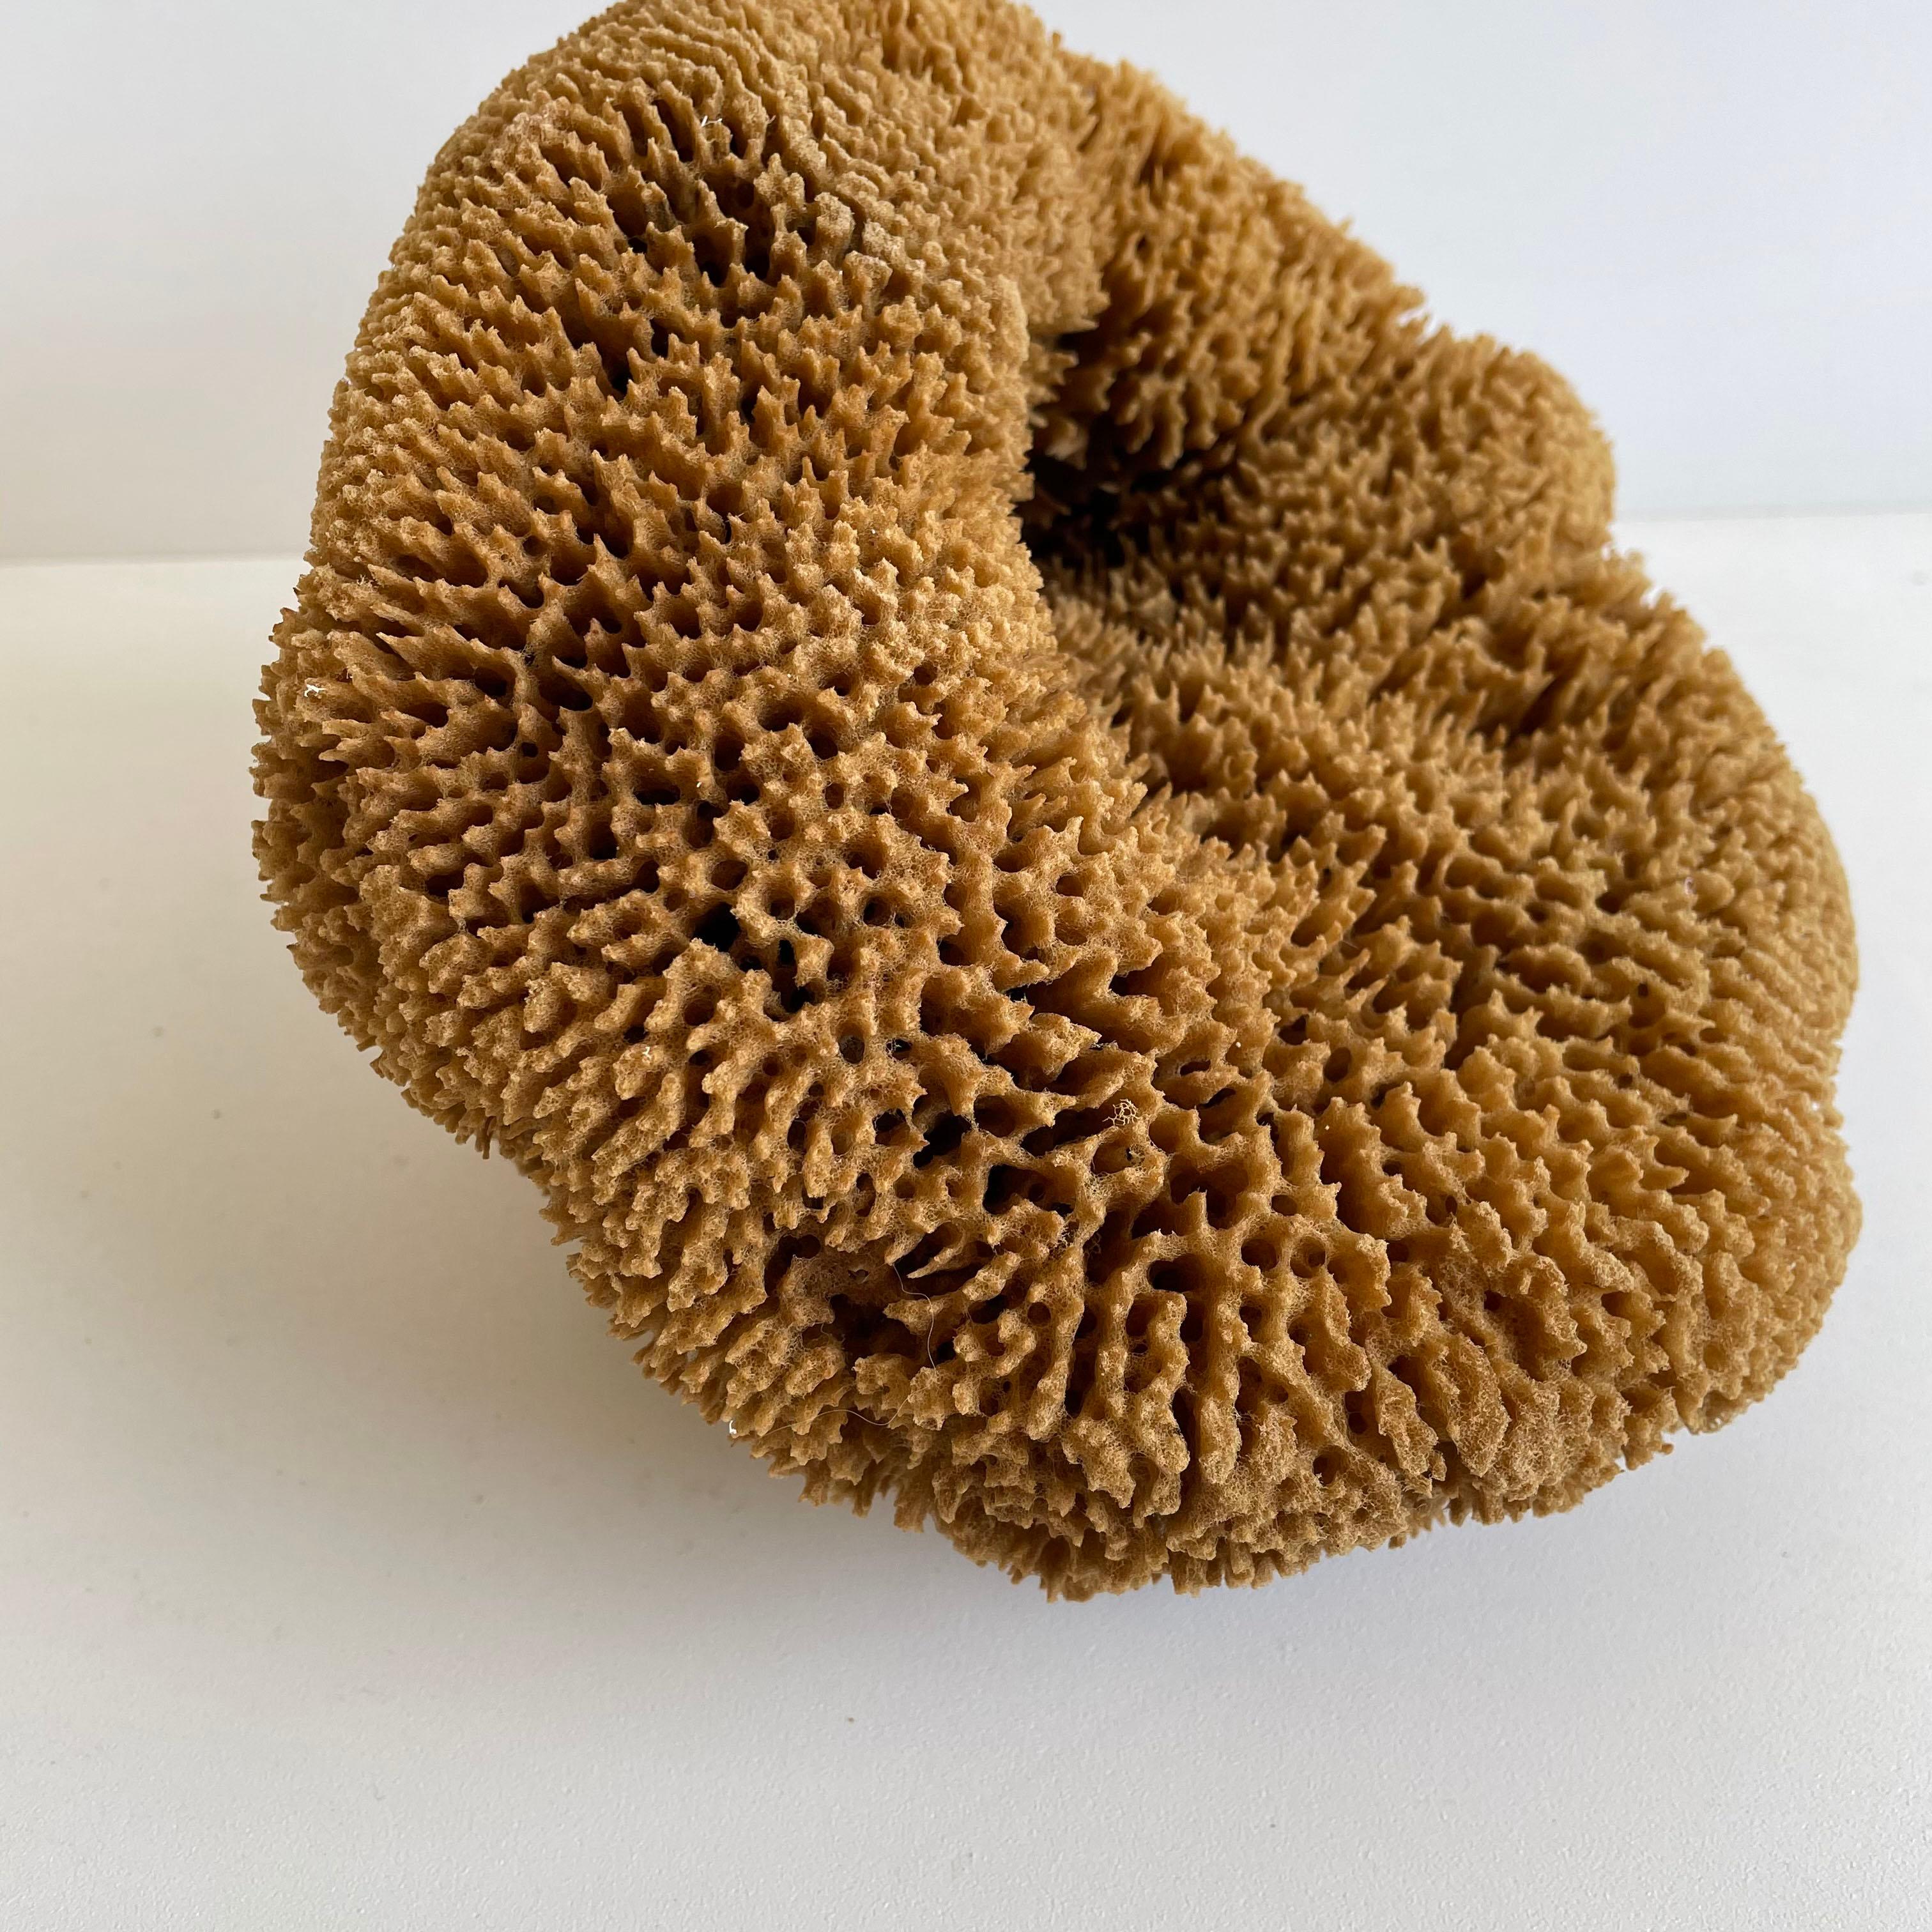 20th Century Natural Beautiful Shaped Natural Sea Sponge